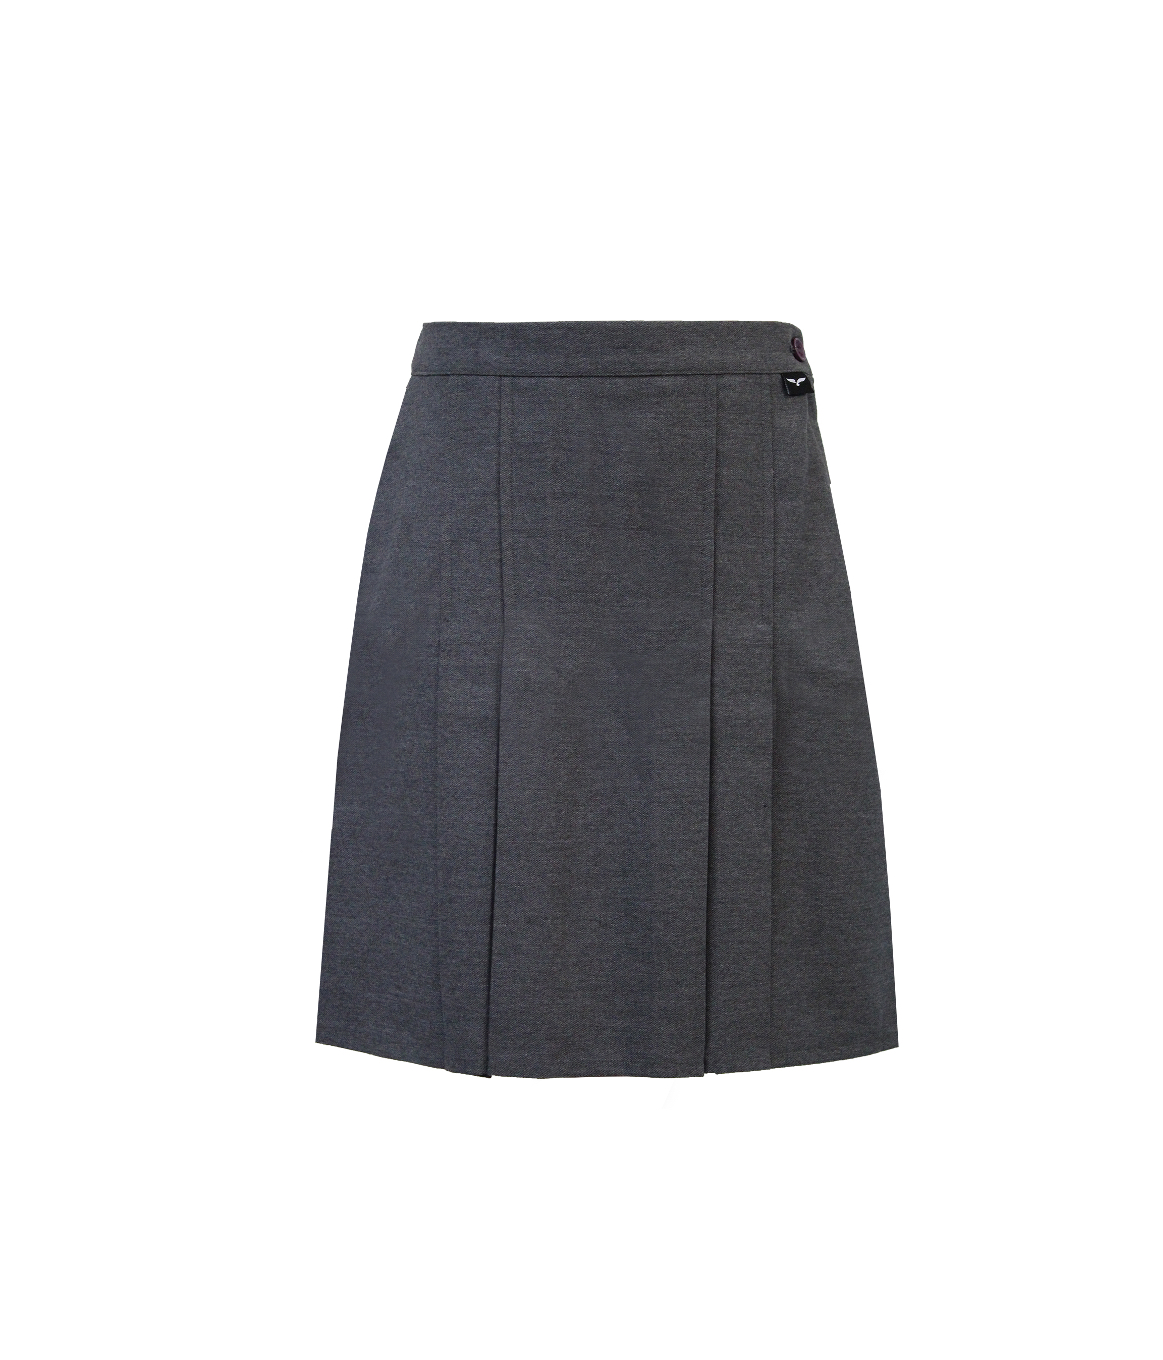 Grey Comfort Fit Girl’s Skirt (T22 Comfort) - Quality Schoolwear